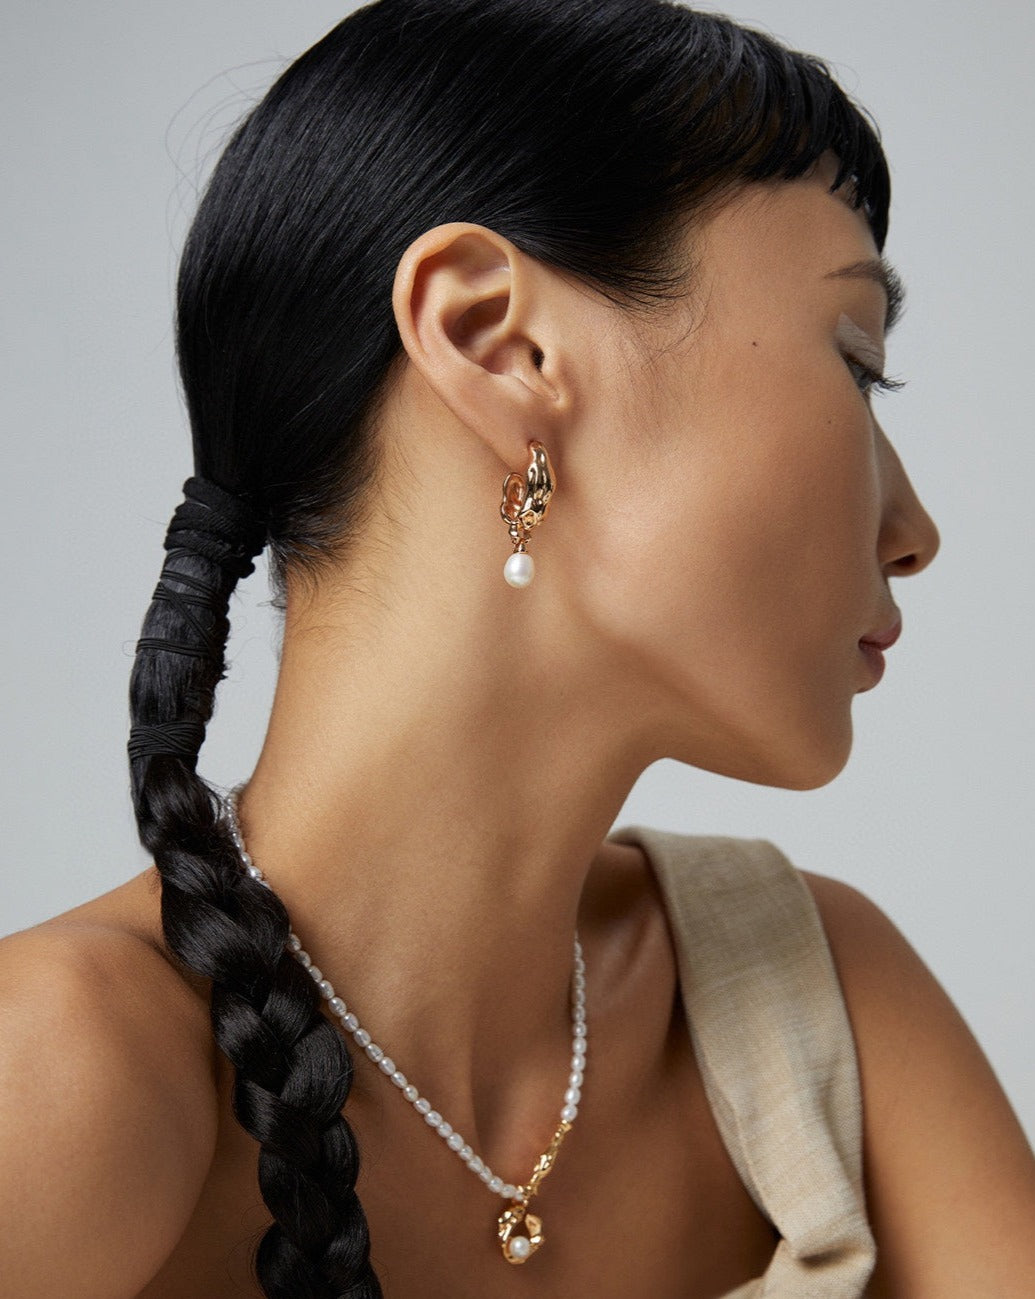 fashion-jewelry-minimalist-jewelry-design-jewelry-statement-necklace-pearl-earring-bracelet-rings-gold-coated-silver-bijoux-retro-gold-jewelry-scarf-shape-pearl-earrings